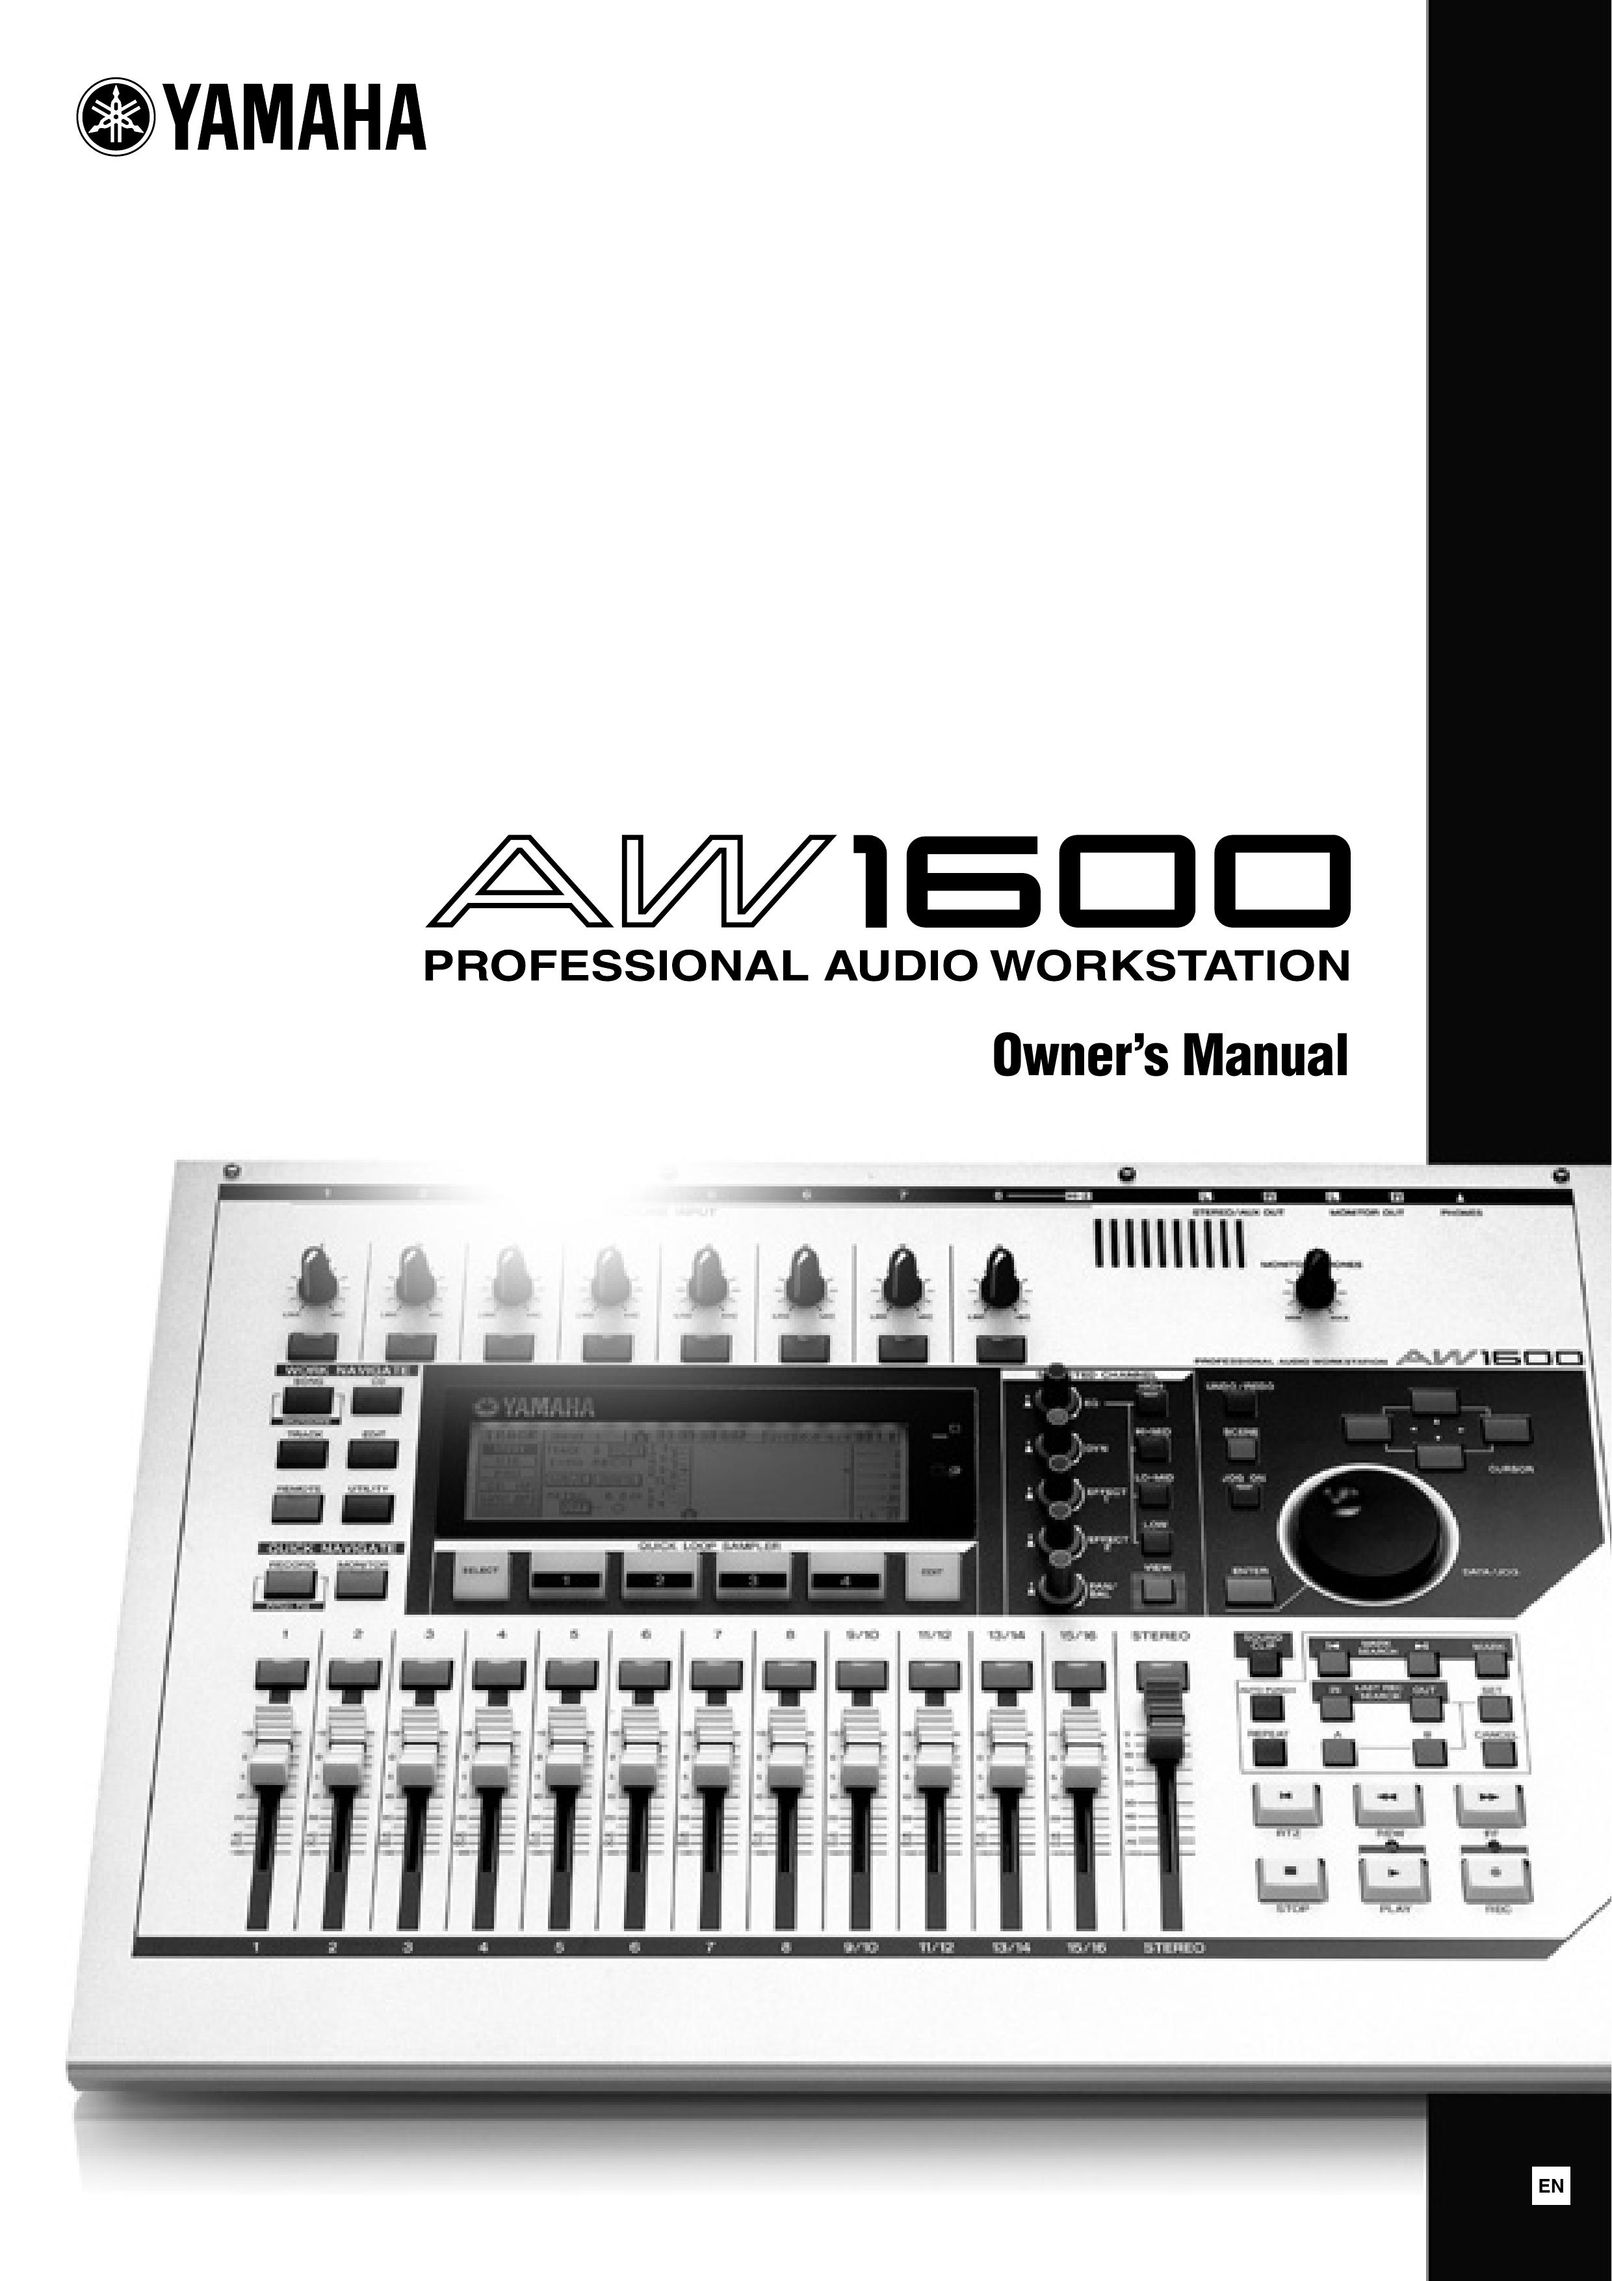 Yamaha aw1600 Stereo System User Manual